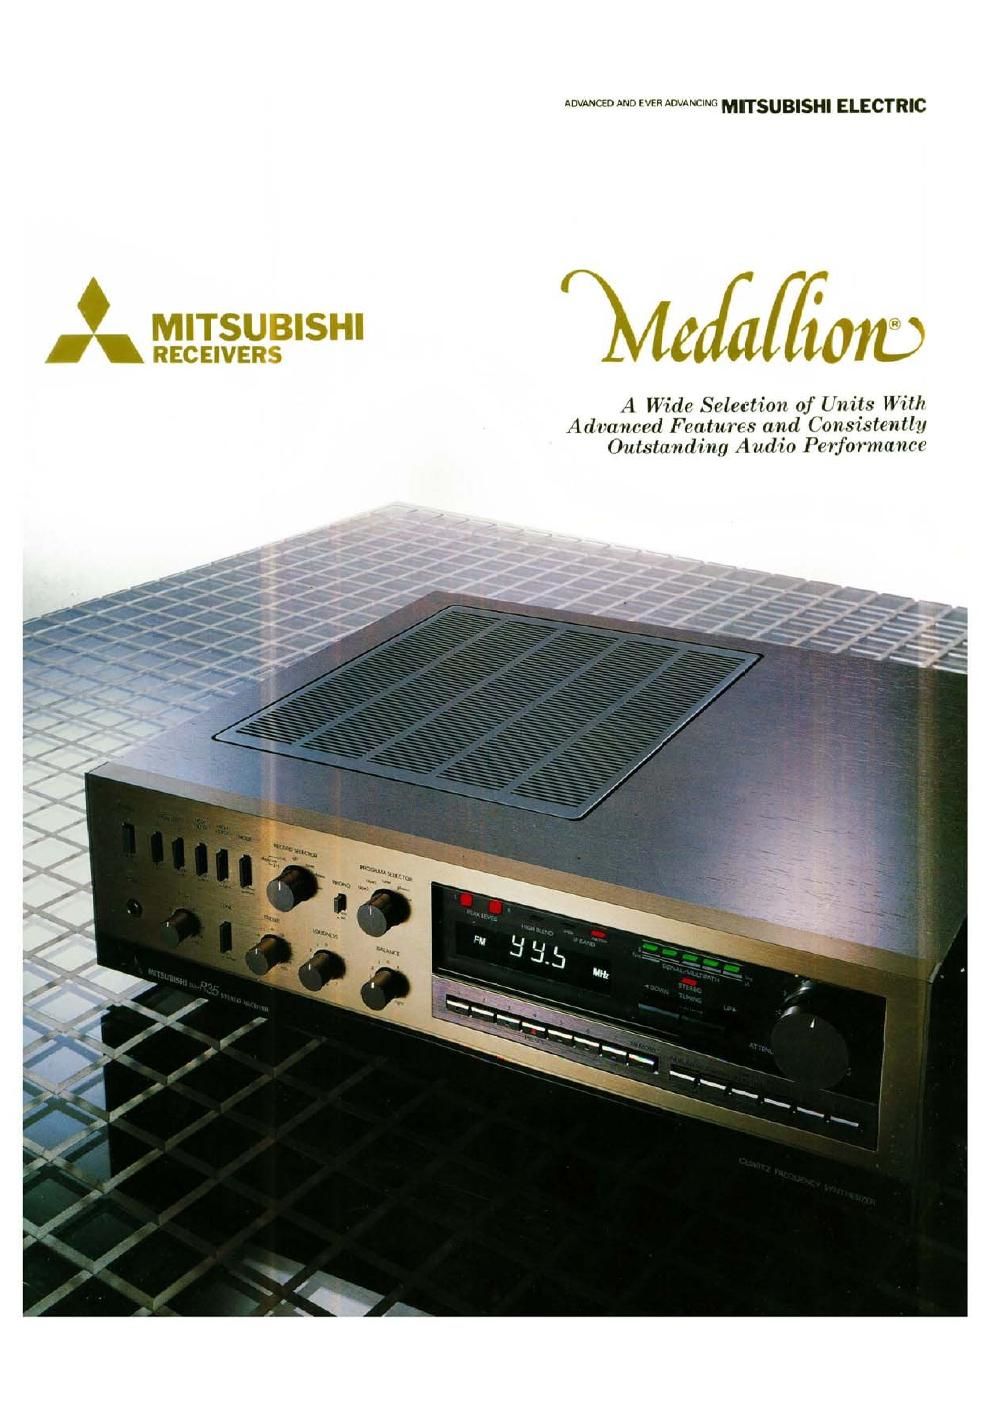 mitsubishi medalion receivers catalog 1981